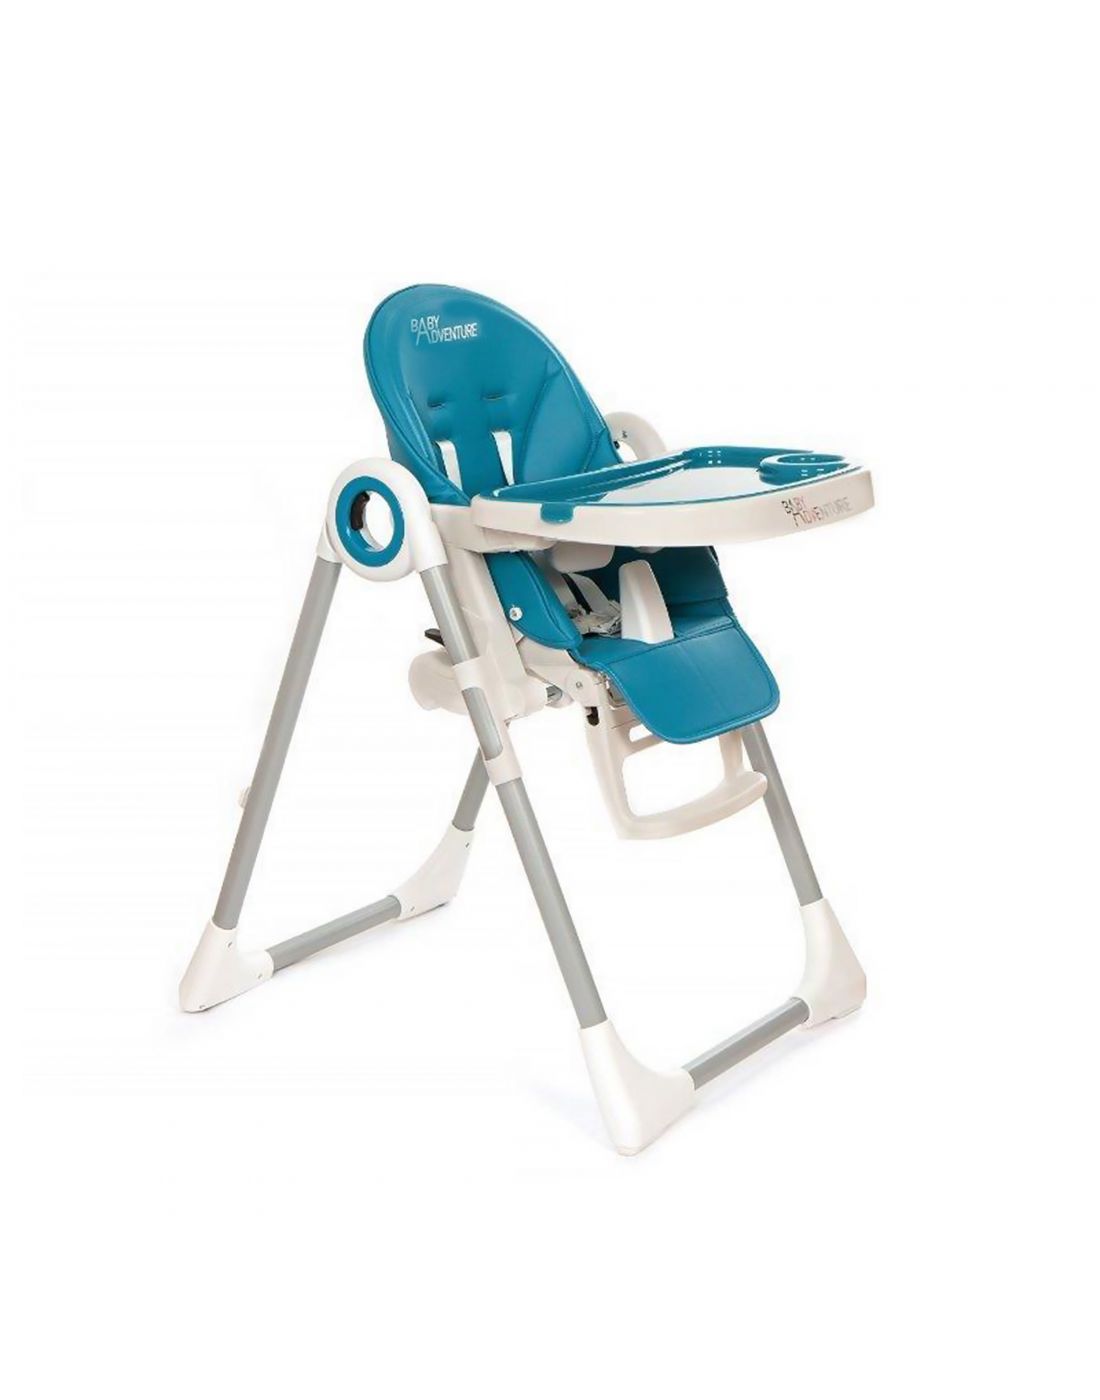 Kids Ηigh Chair VIVA 2 Perol